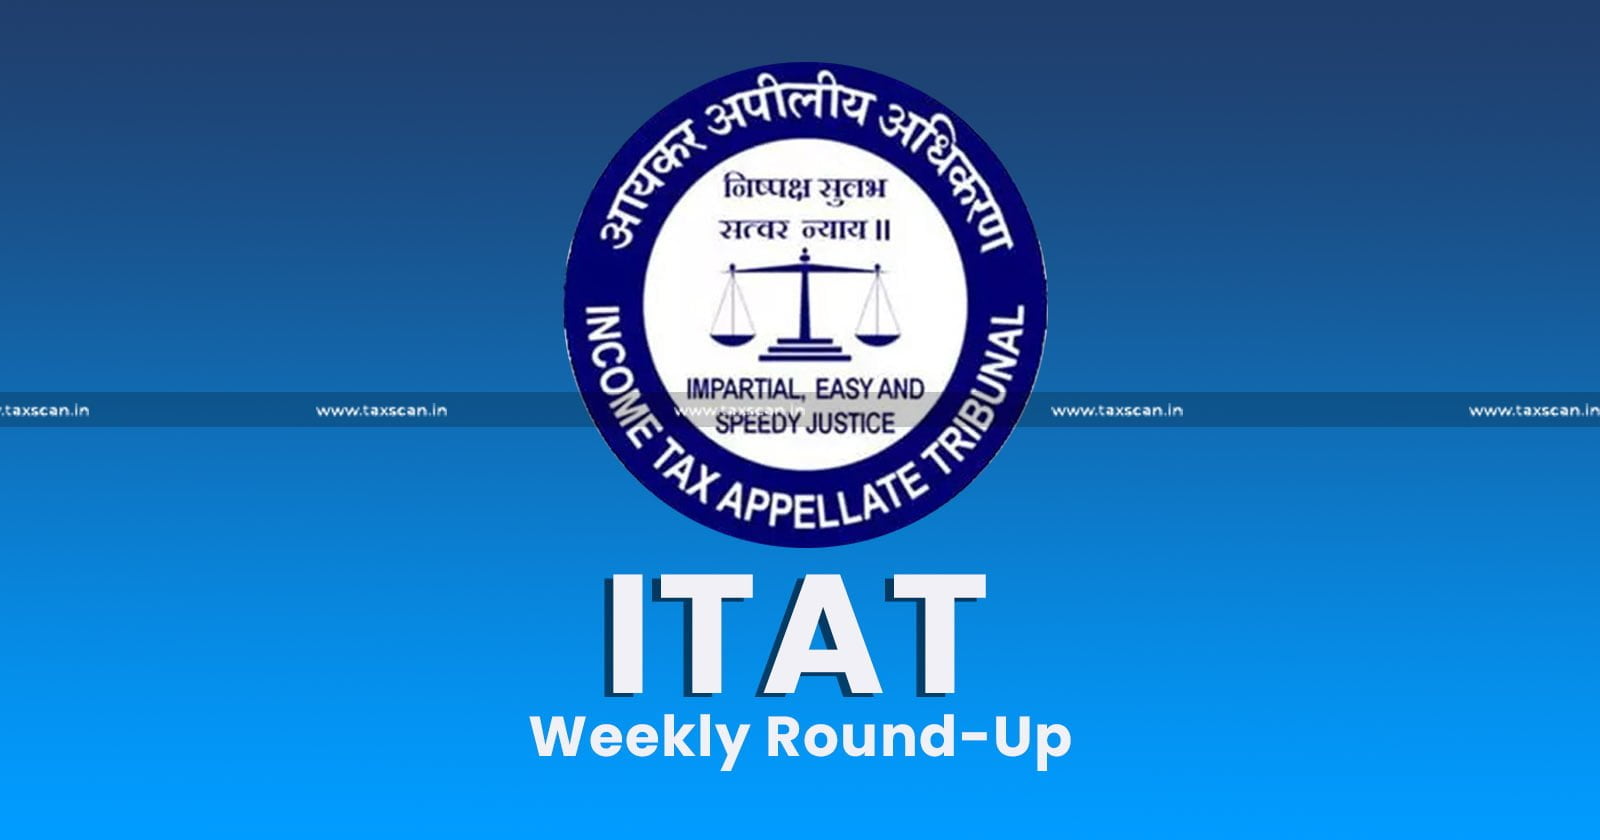 ITAT Weekly Round up - ITAT - Weekly - Round Up - Weekly Round up - Income Tax Weekly Round Up - Income Tax - TAXSCAN